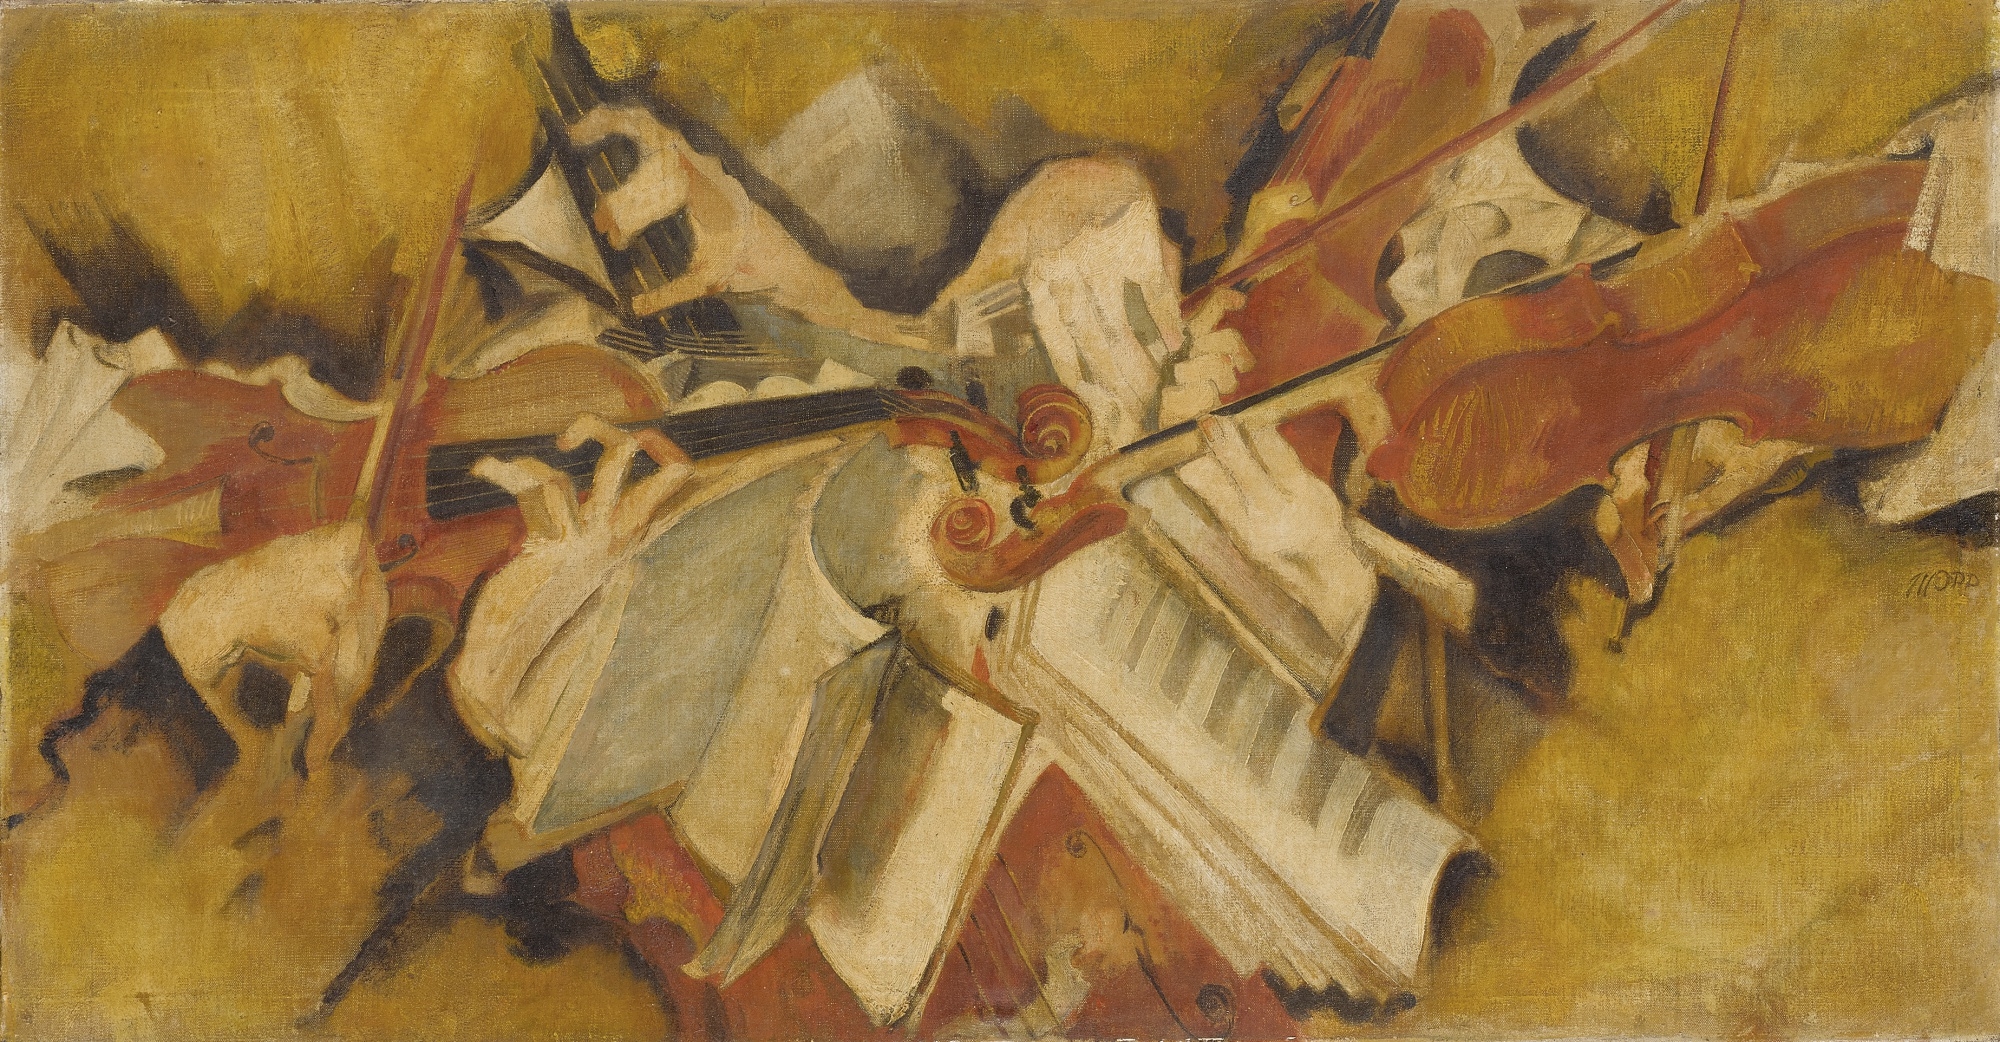 STREICHQUARTETT (STRING QUARTET) by Max Oppenheimer, Painted in 1948